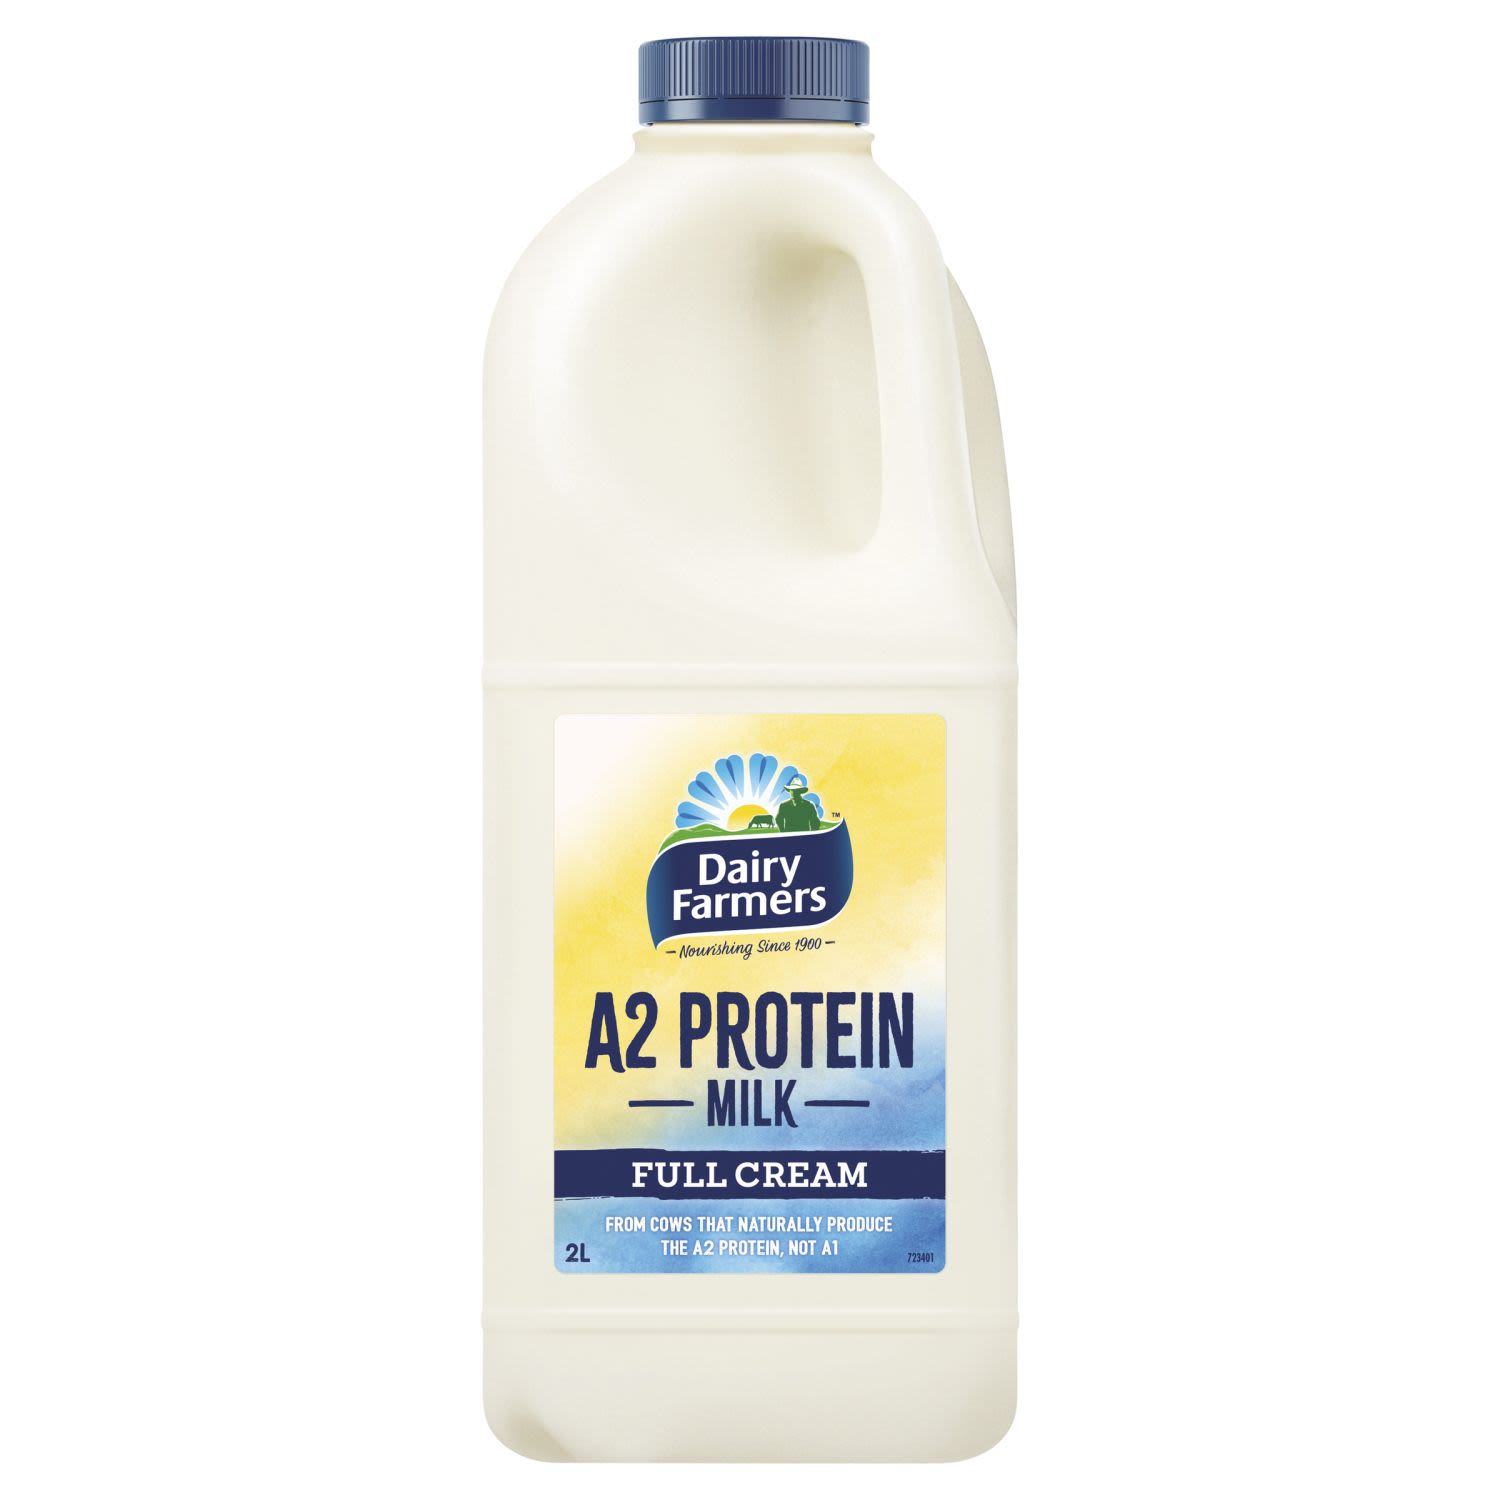 Dairy Farmers A2 Protein Milk Full Cream, 2 Litre